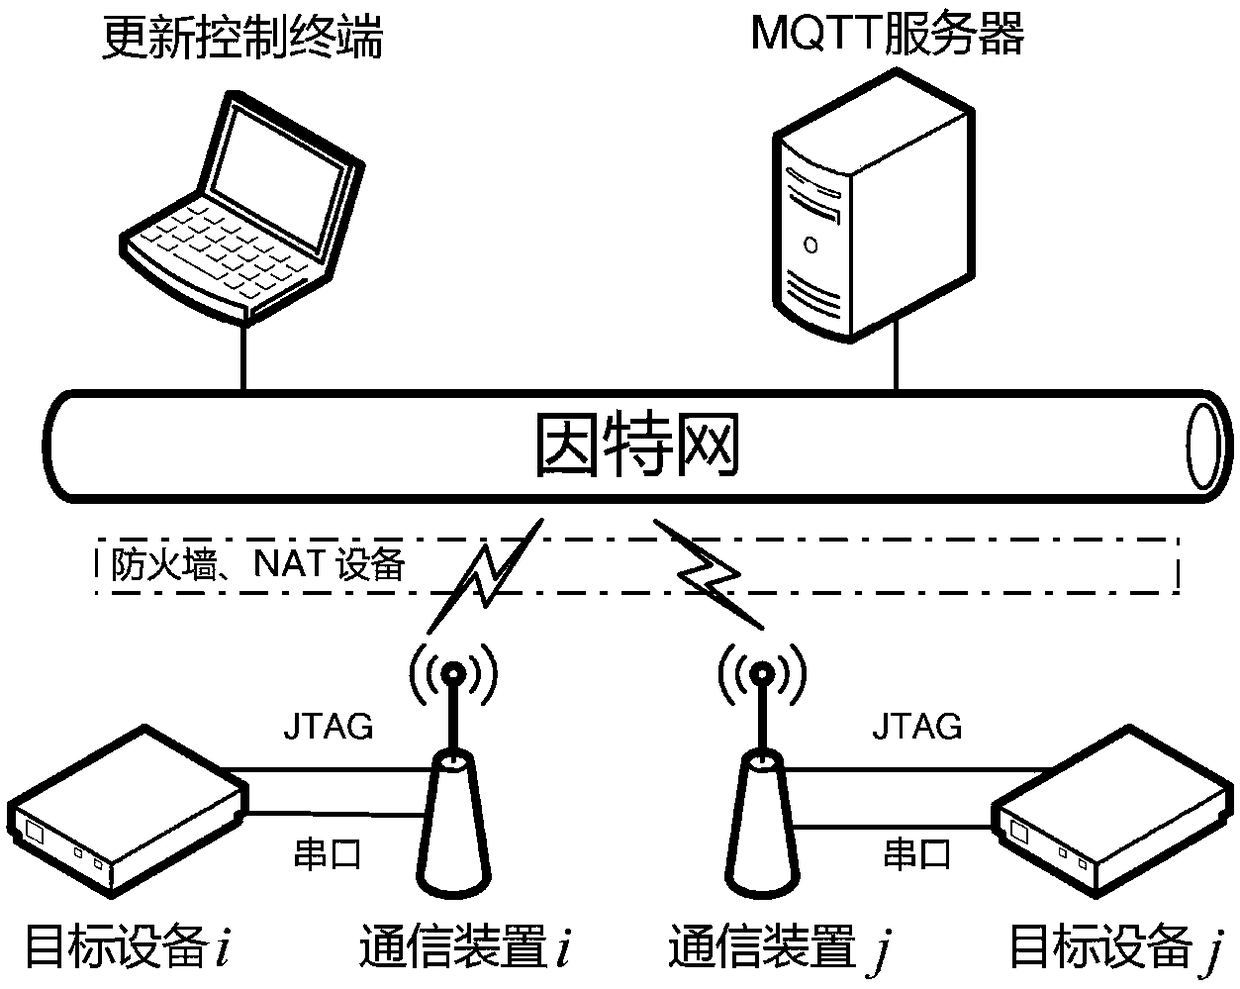 System and method for serial port transparent transmission and program updating in internet range